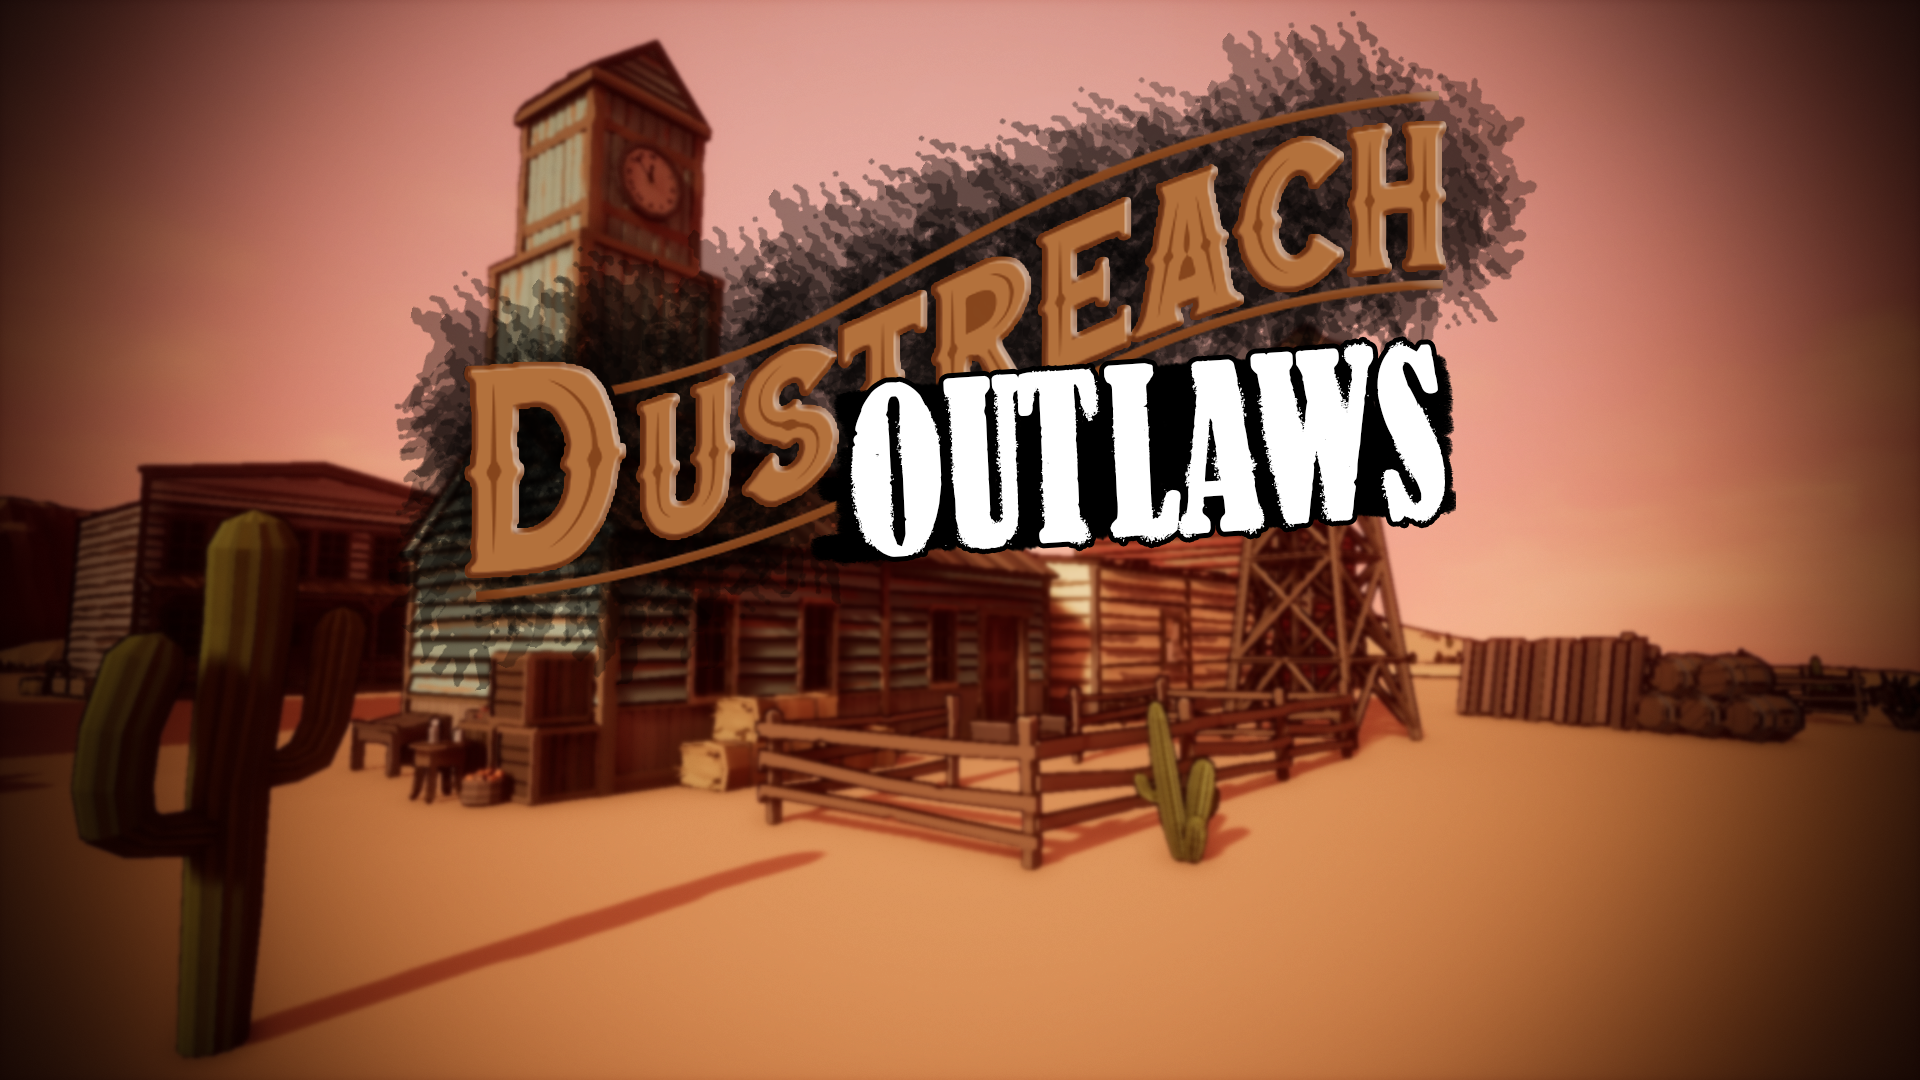 Dustreach Outlaws